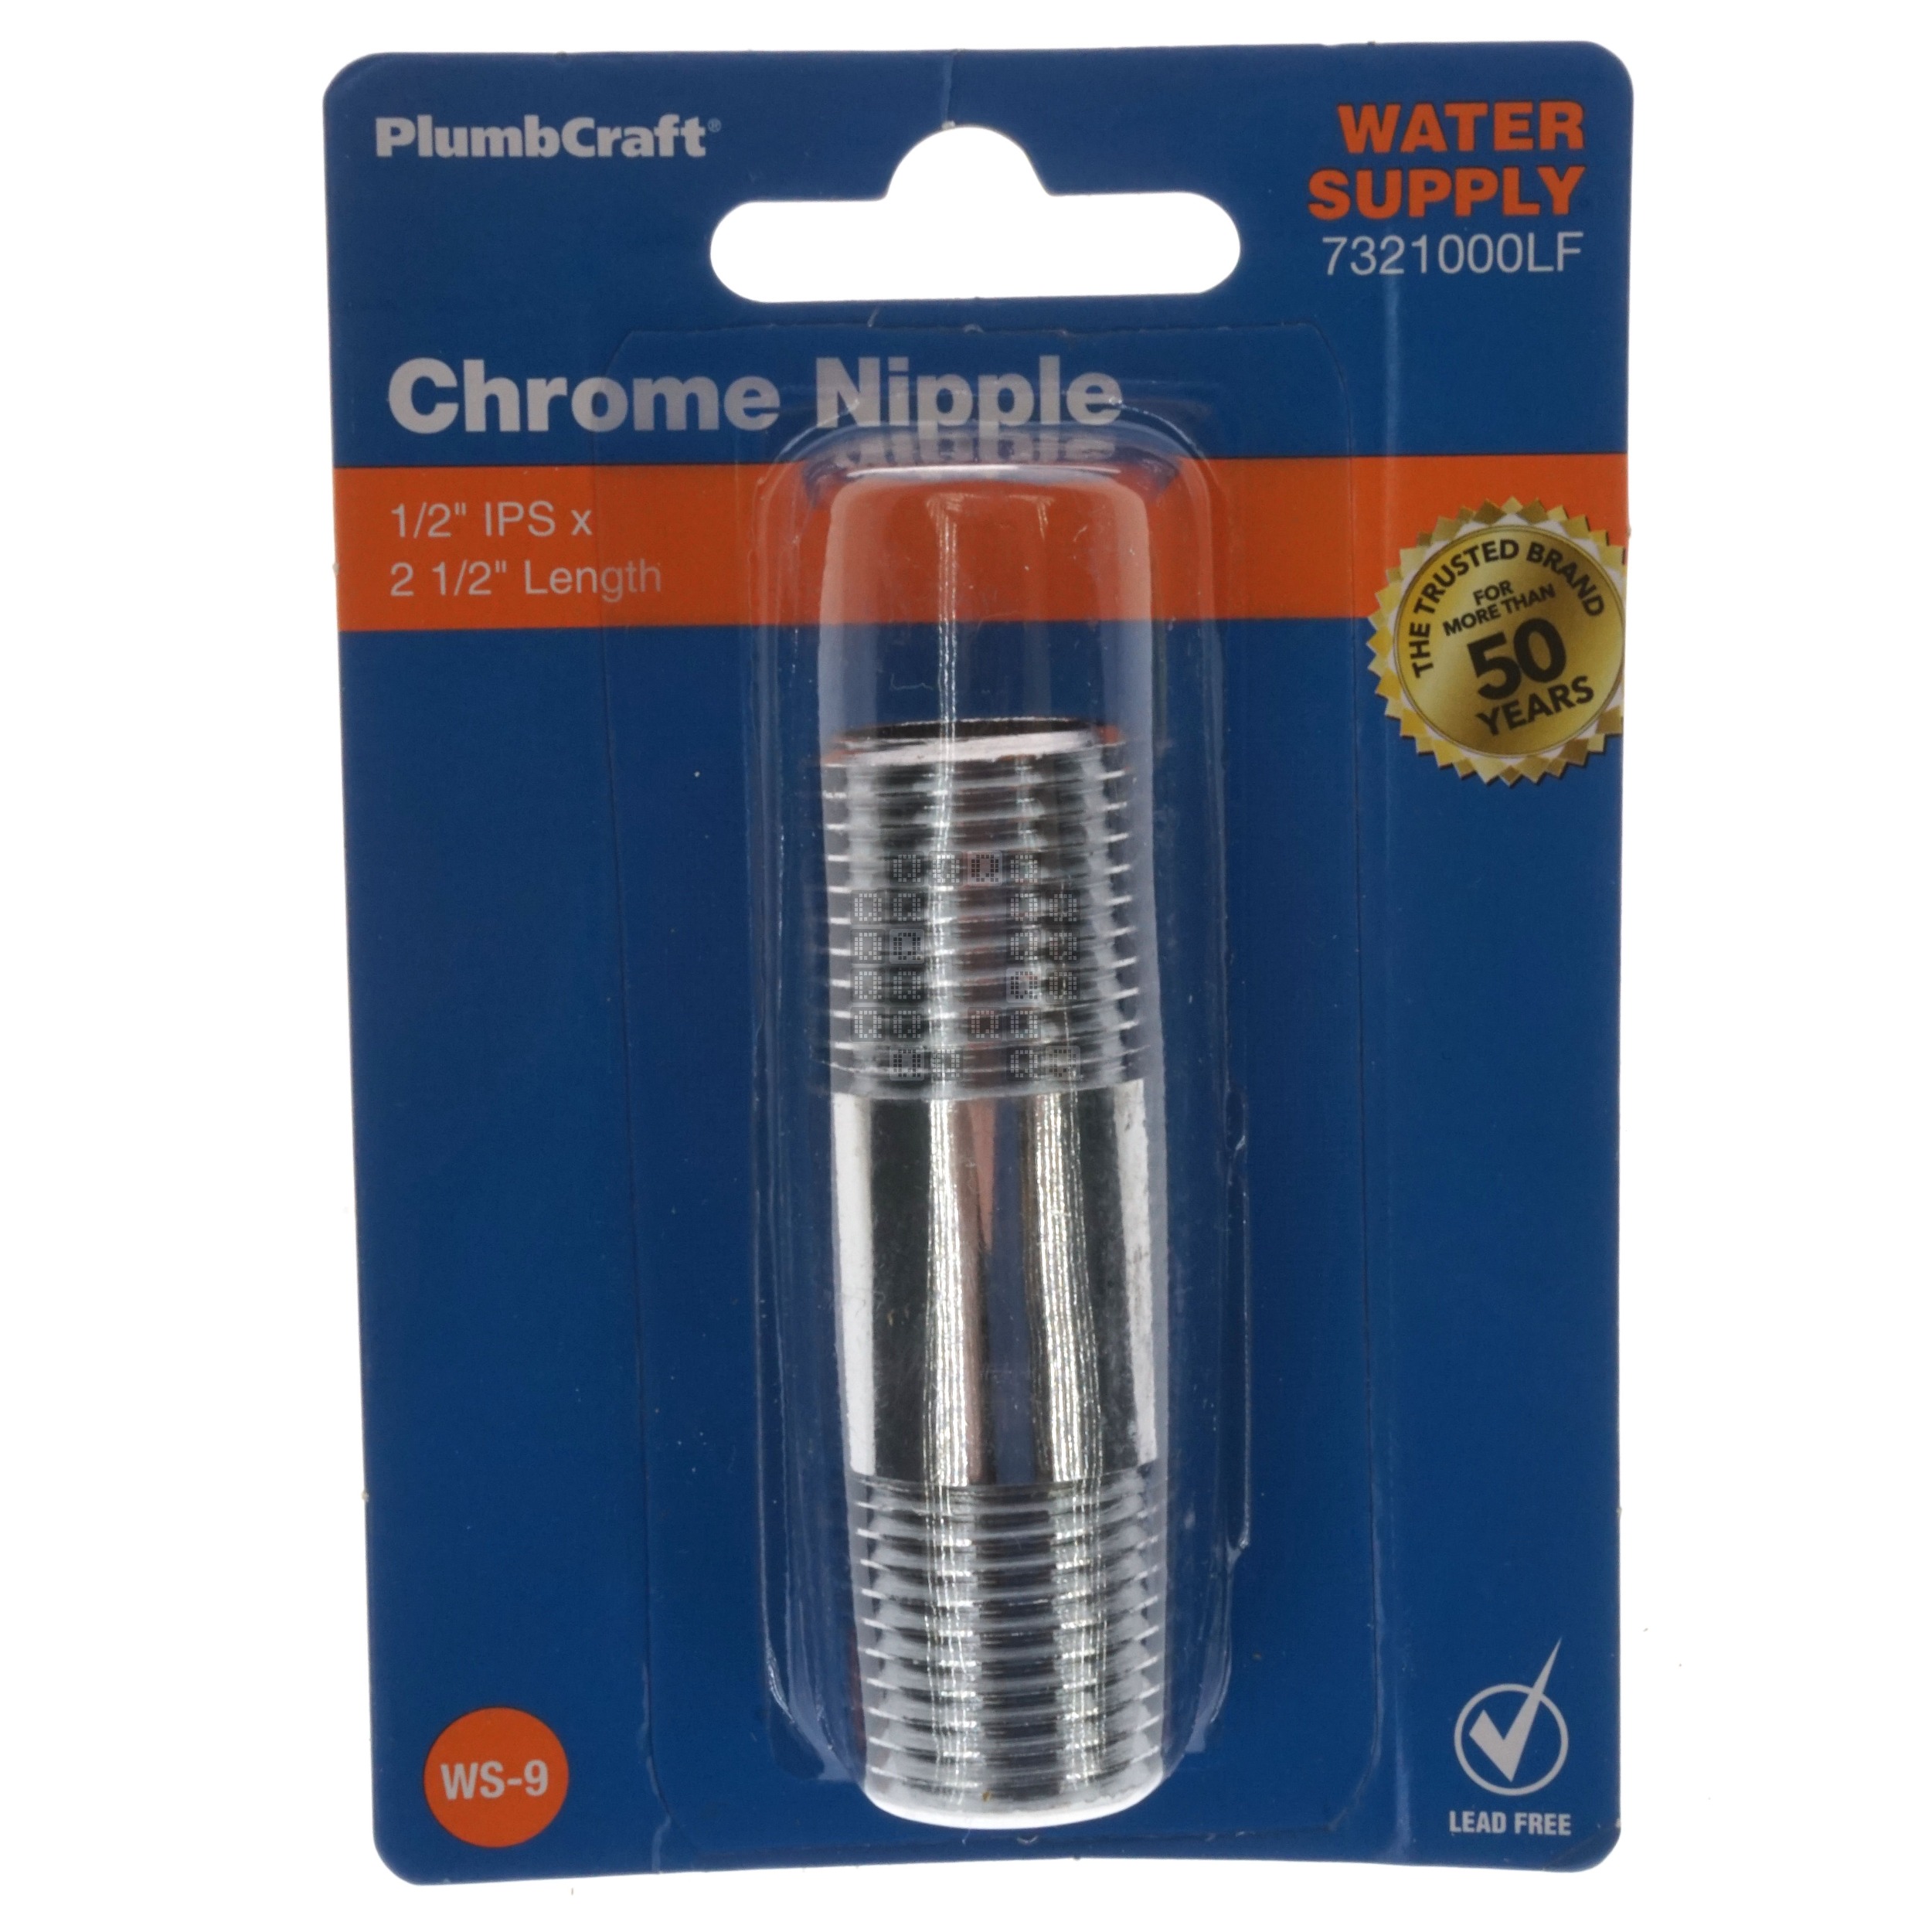 PlumbCraft 7321000LF 1/2" IPS x 2-1/2" Length Pipe Nipple, Chrome Plated Brass